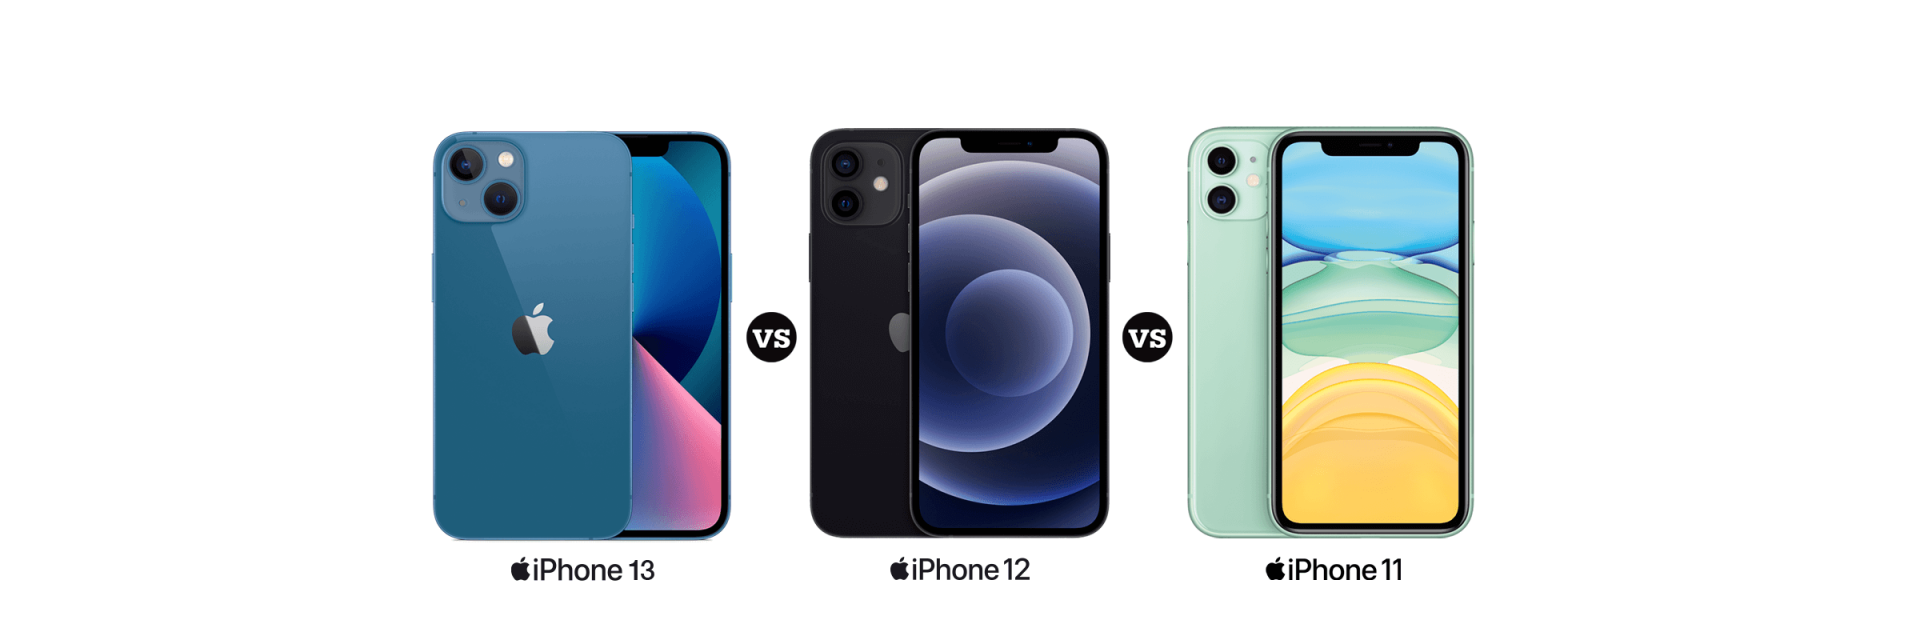 Iphone 11 vs iphone 12